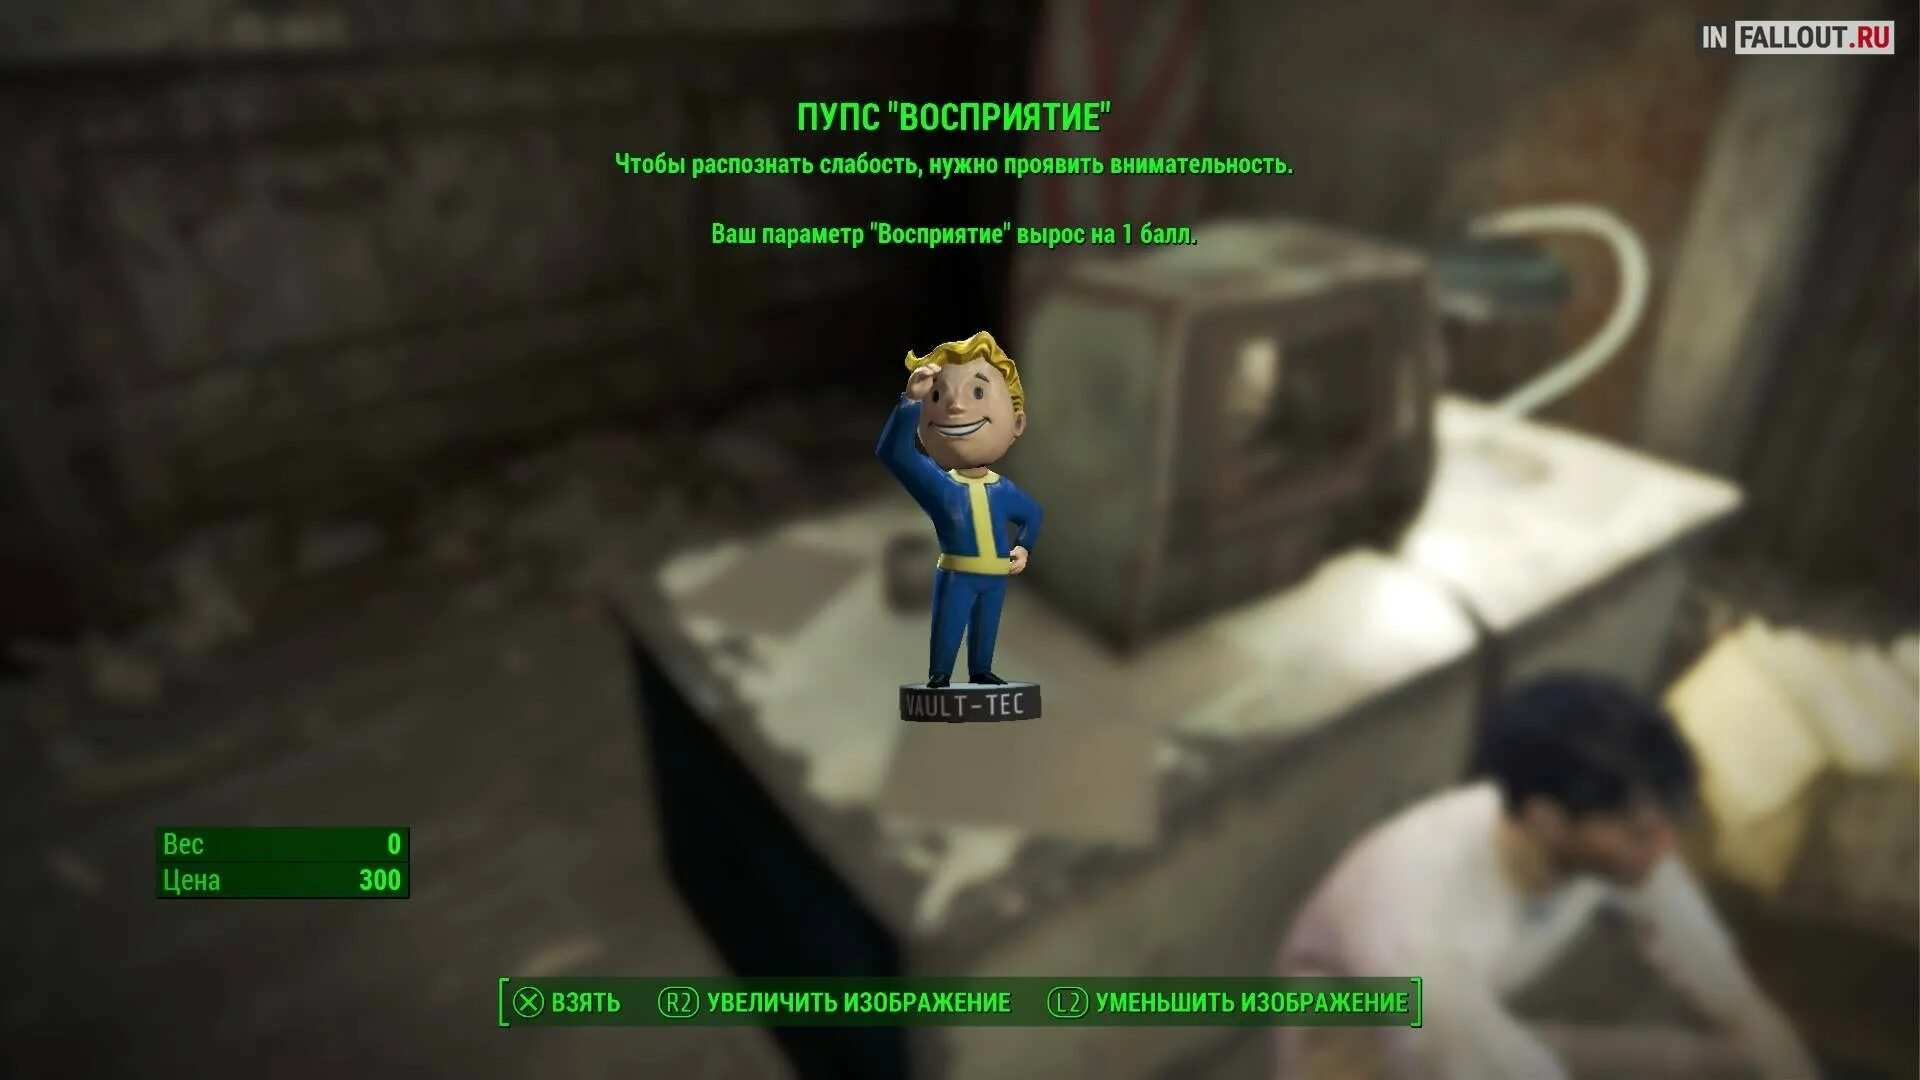 Пупсы фоллаут карта. Пупс удача Fallout 4 местонахождение. Пупс красноречие фоллаут 3. Пупс ловкость Fallout 4 местонахождение. Фоллаут 4 Тринити Тауэр пупс.